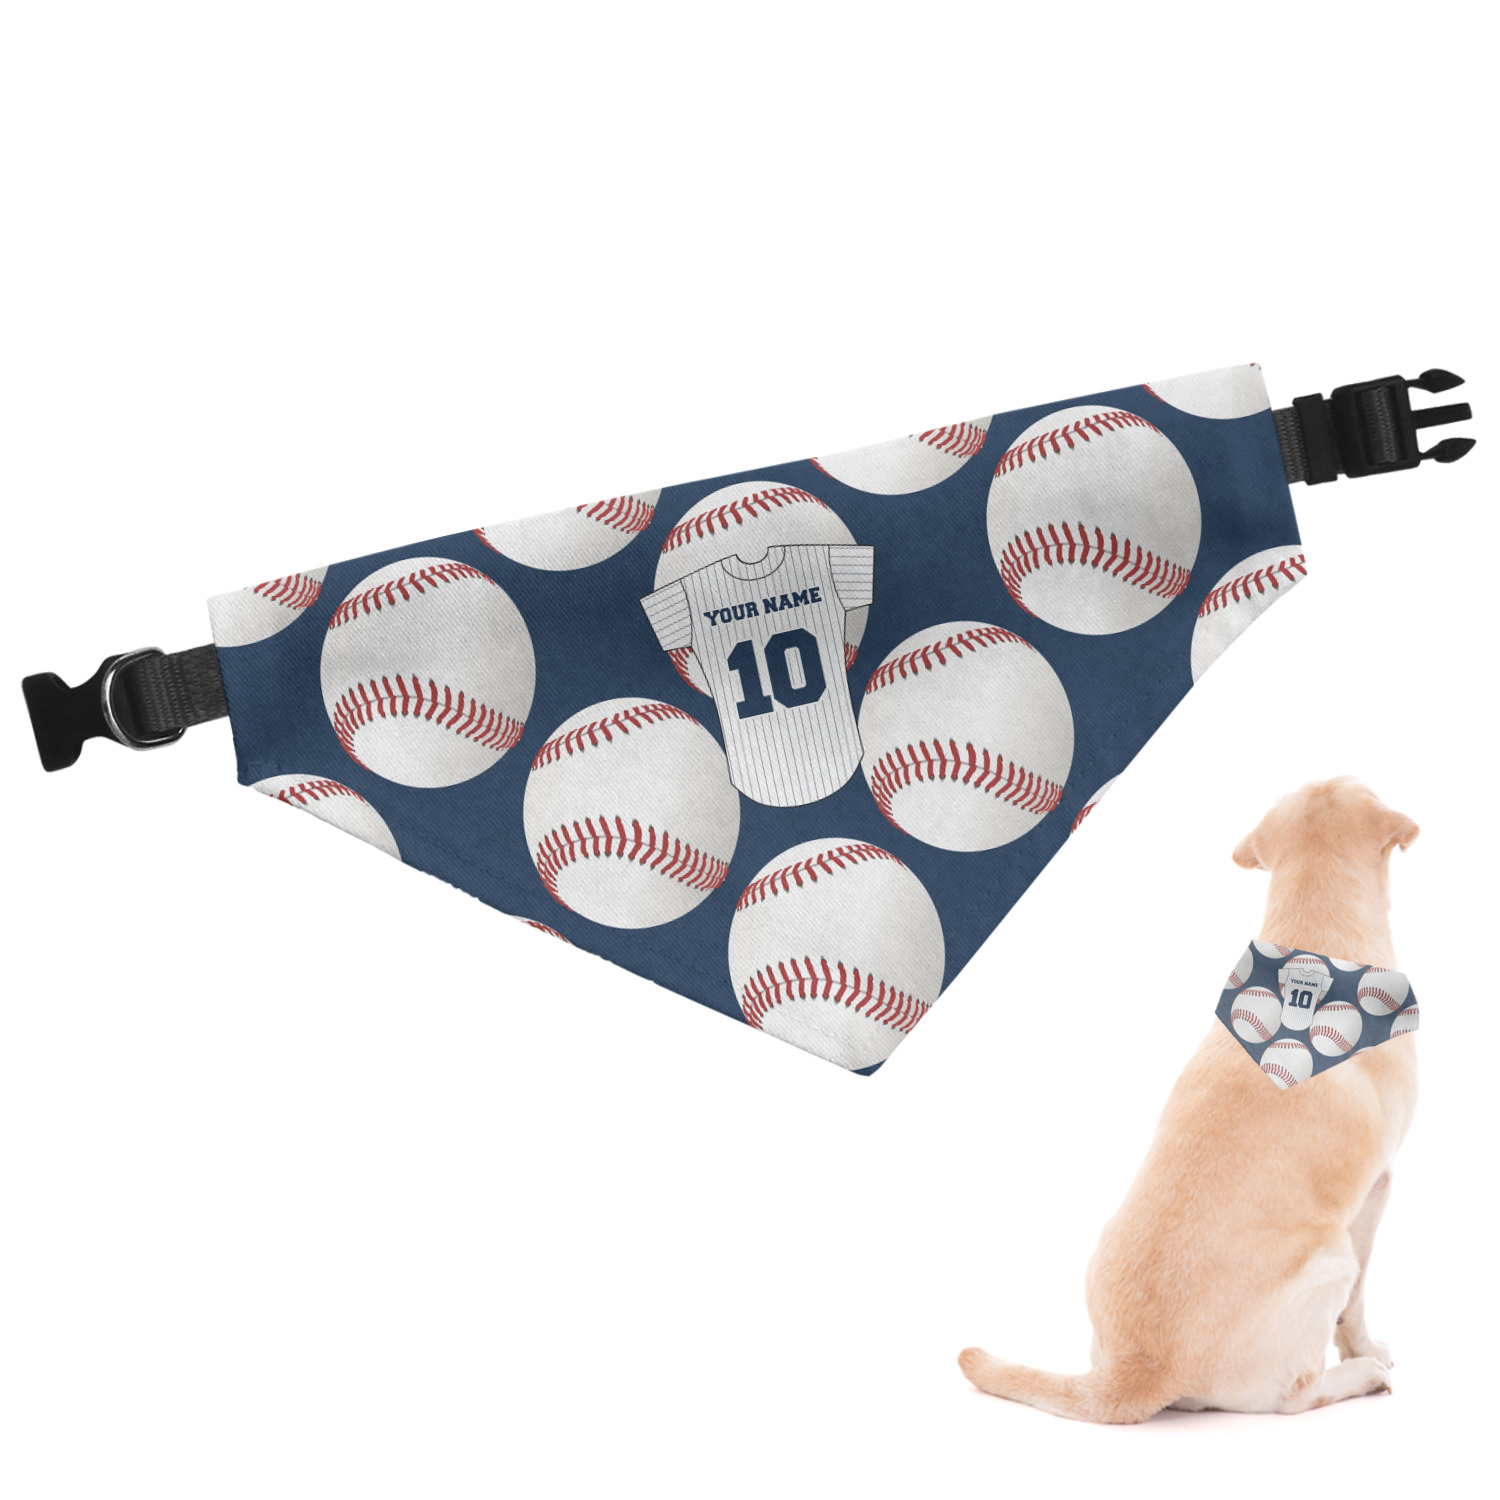 custom dog baseball jerseys